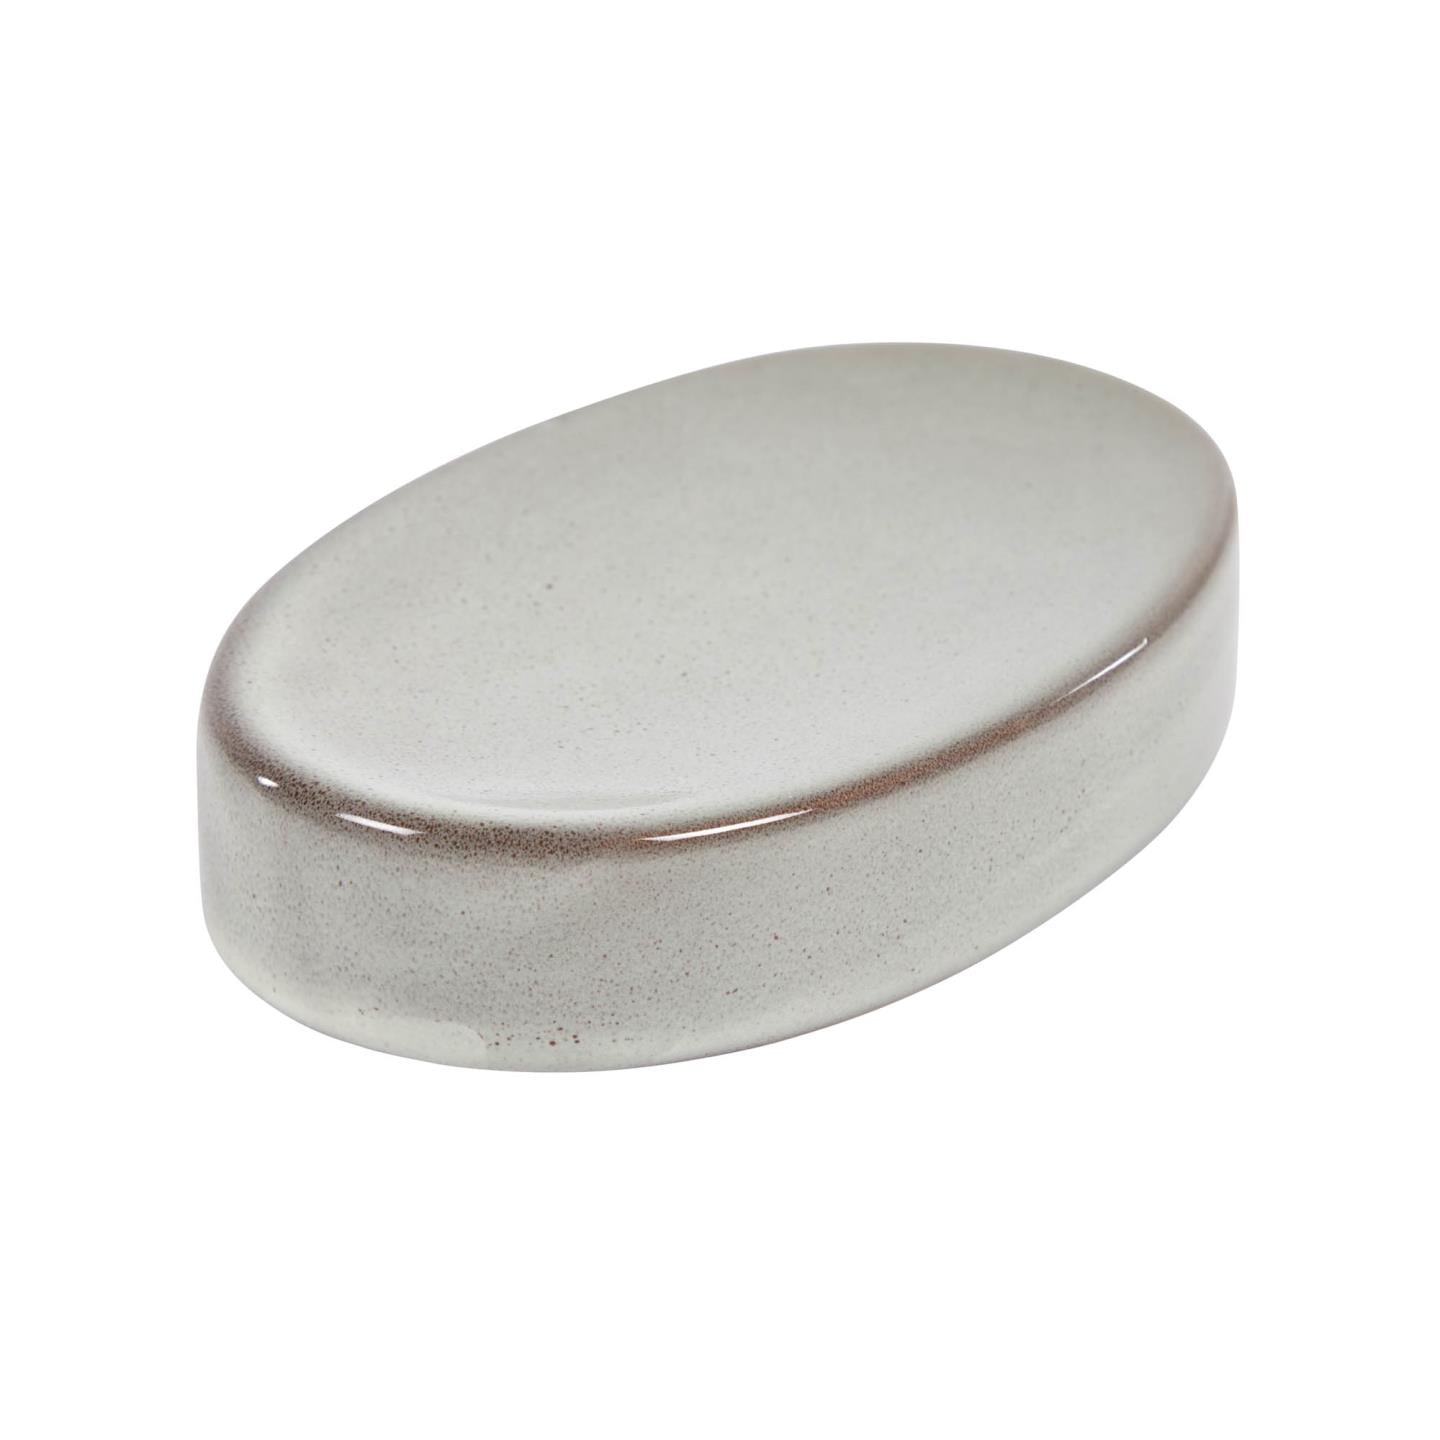 Chavela grey ceramic soap dish